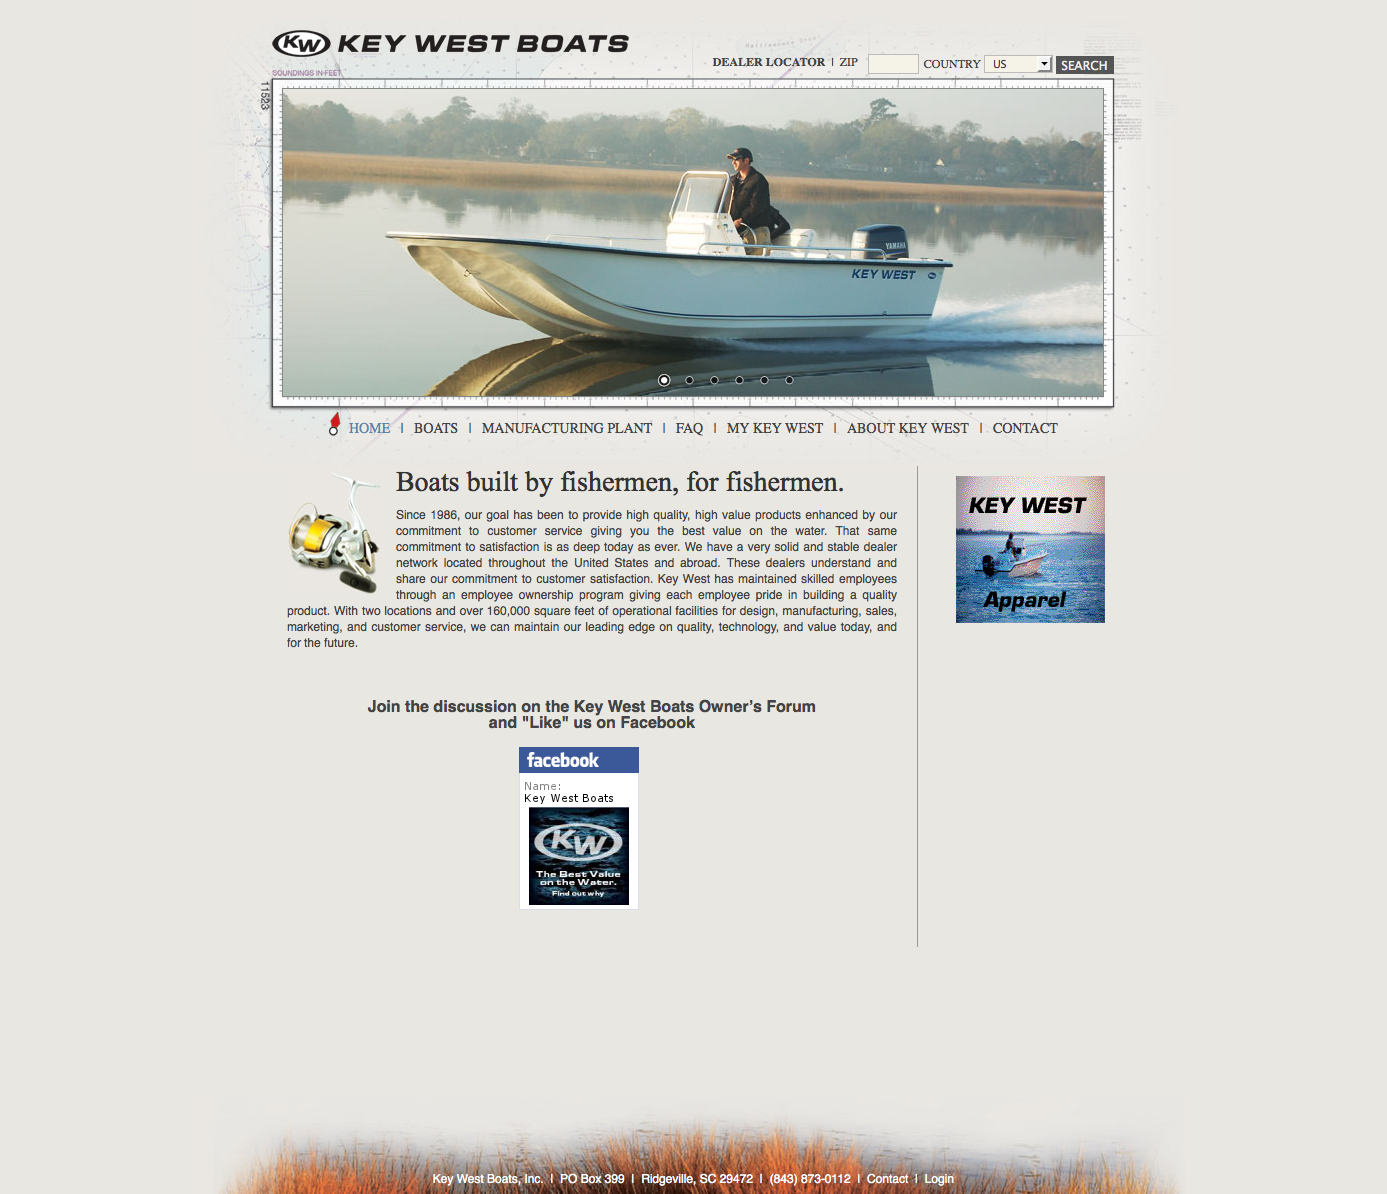 keywestboats-com-screen-capture-2012-9-24-2-8-13.png